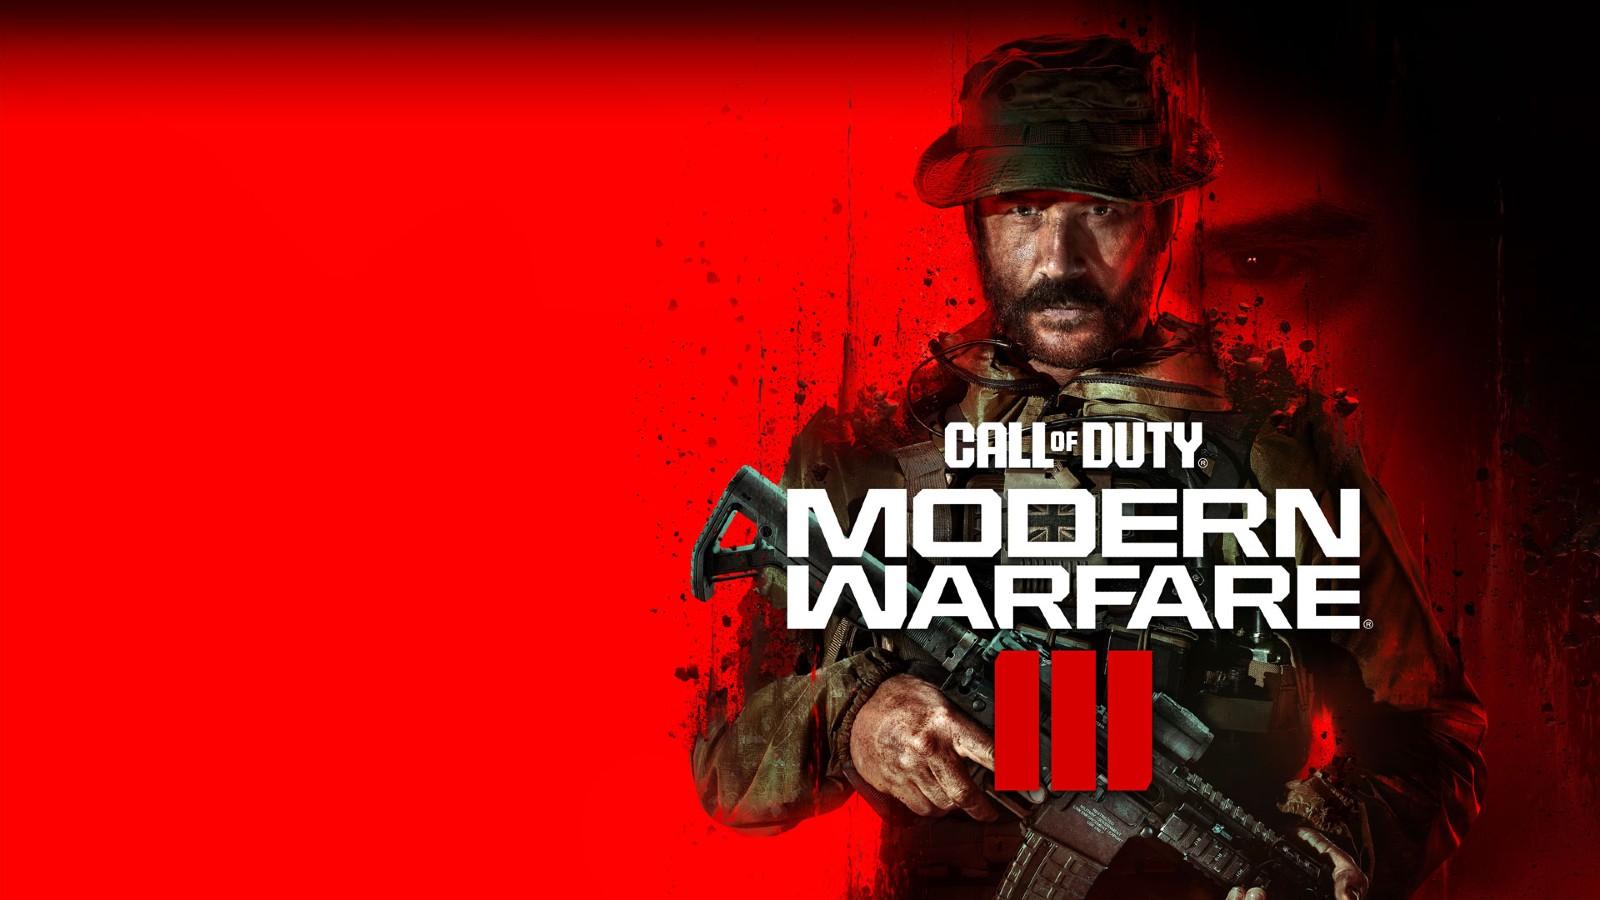 Call of Duty: Modern Warfare III - Cross-Gen Bundle with Exclusive  KontrolFreek Thumb Grips - Playstation 4 with Playstation 5 Upgrade